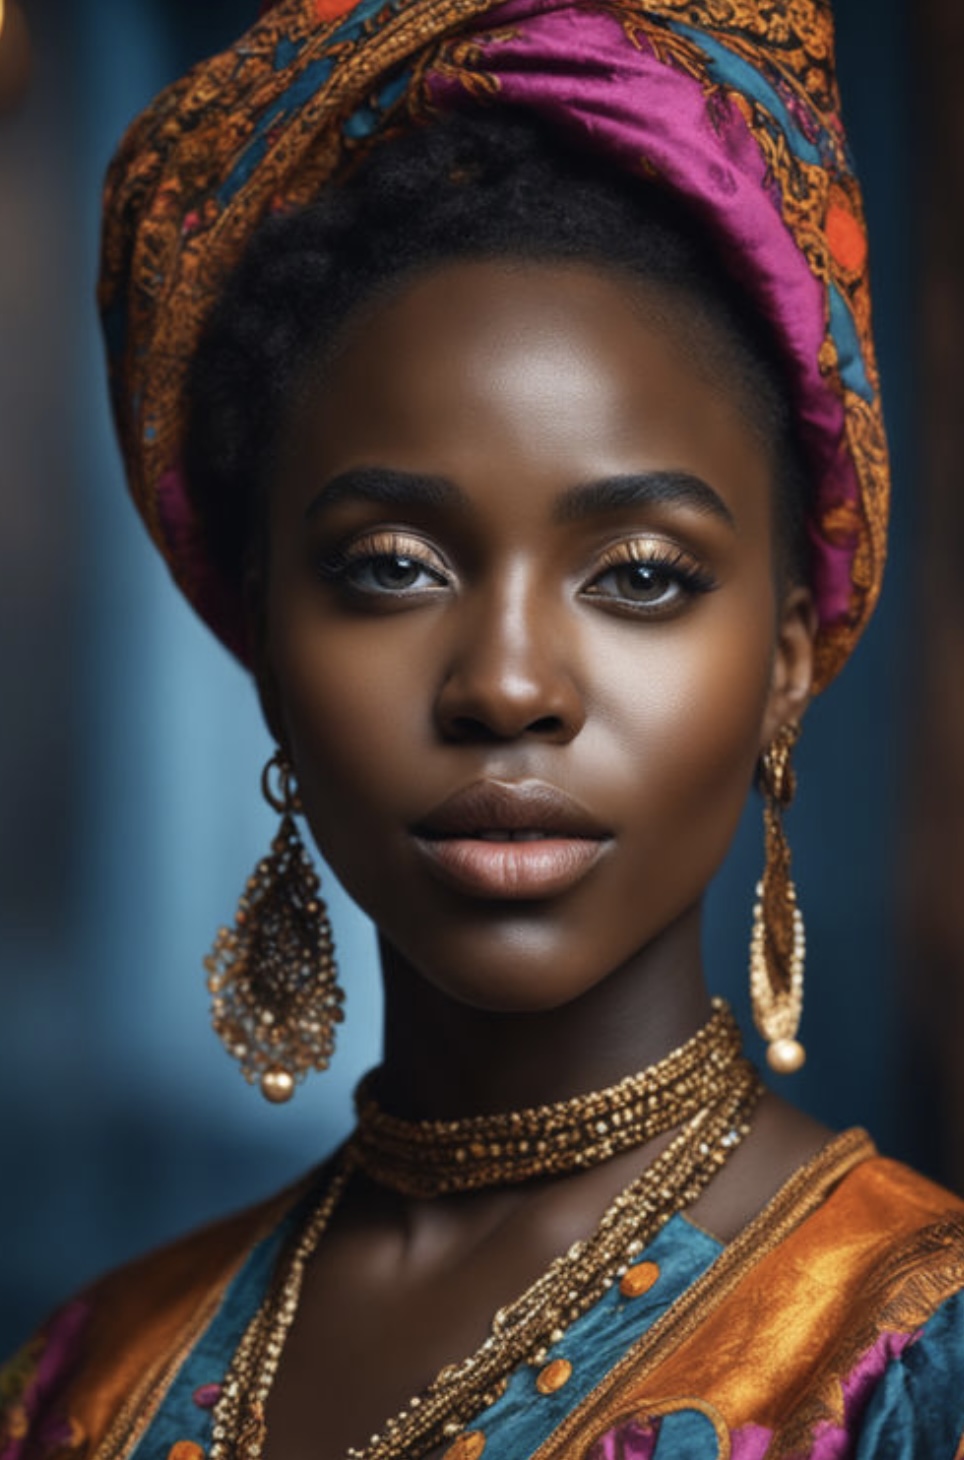 Beatiful color of eyes of black women22